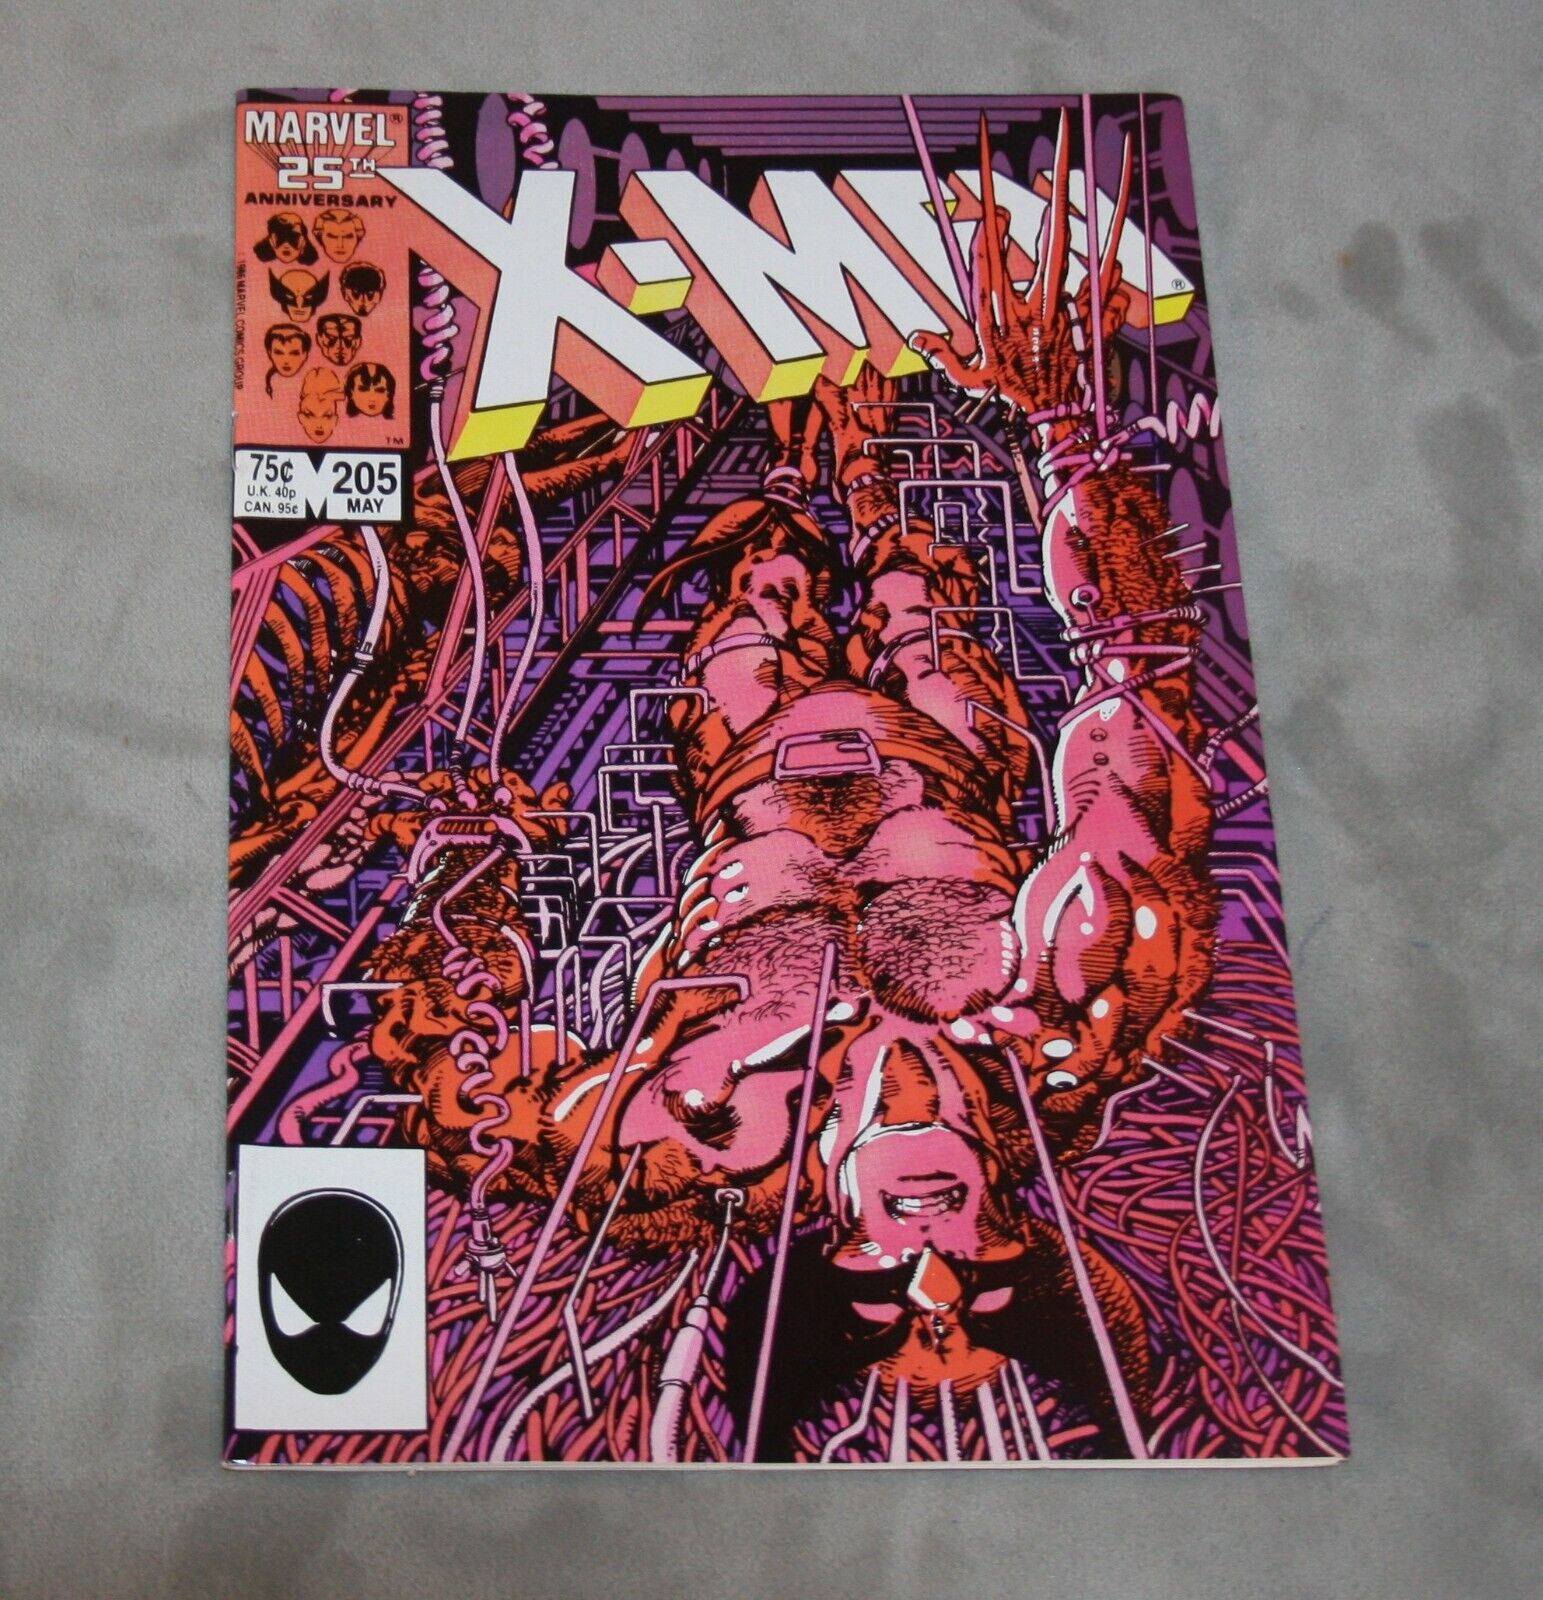 Marvel Comics The Uncanny X-men #205 - High Grade - Origin of Lady DeathStrike